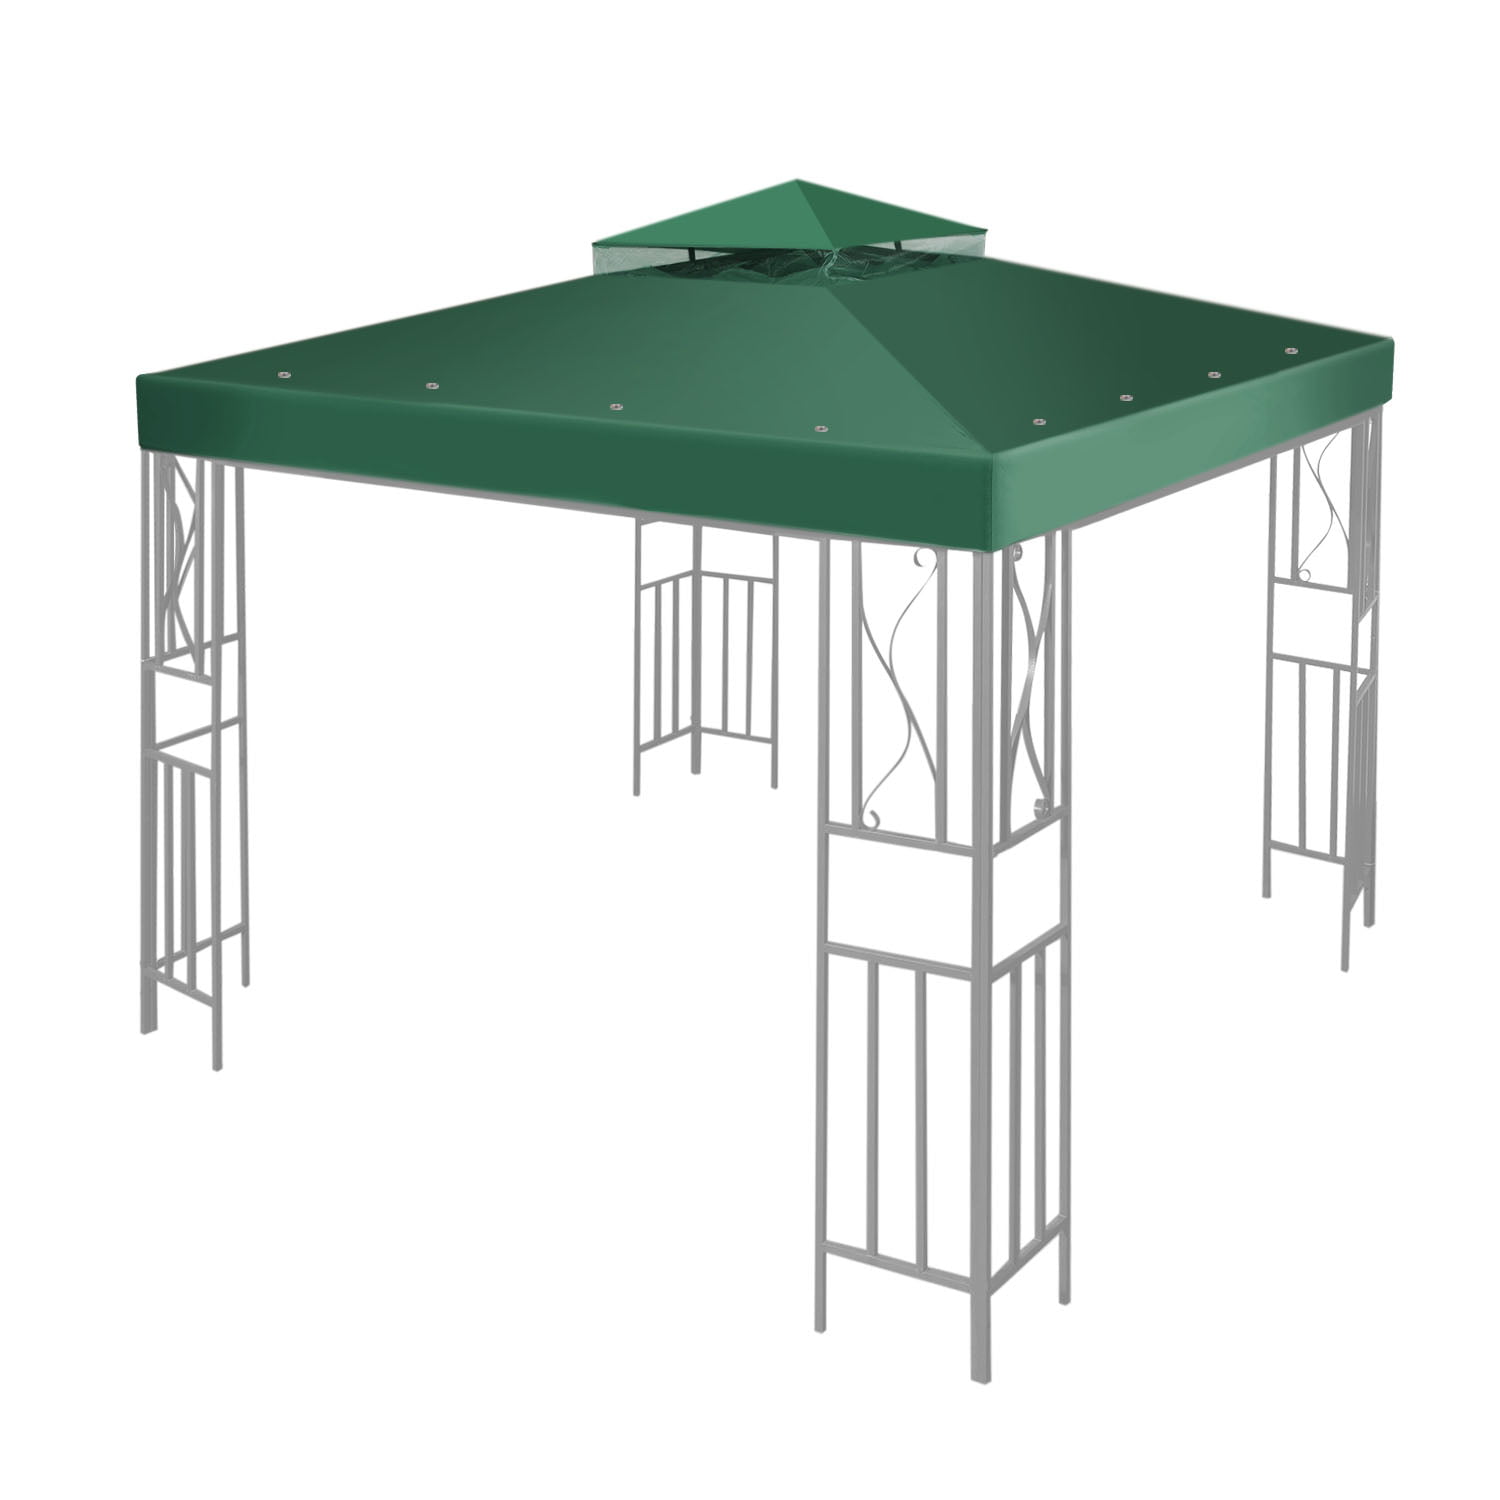 10'x10' Waterproof Gazebo Top Replacement Canopy Sunshade Patio Garden Cover US 